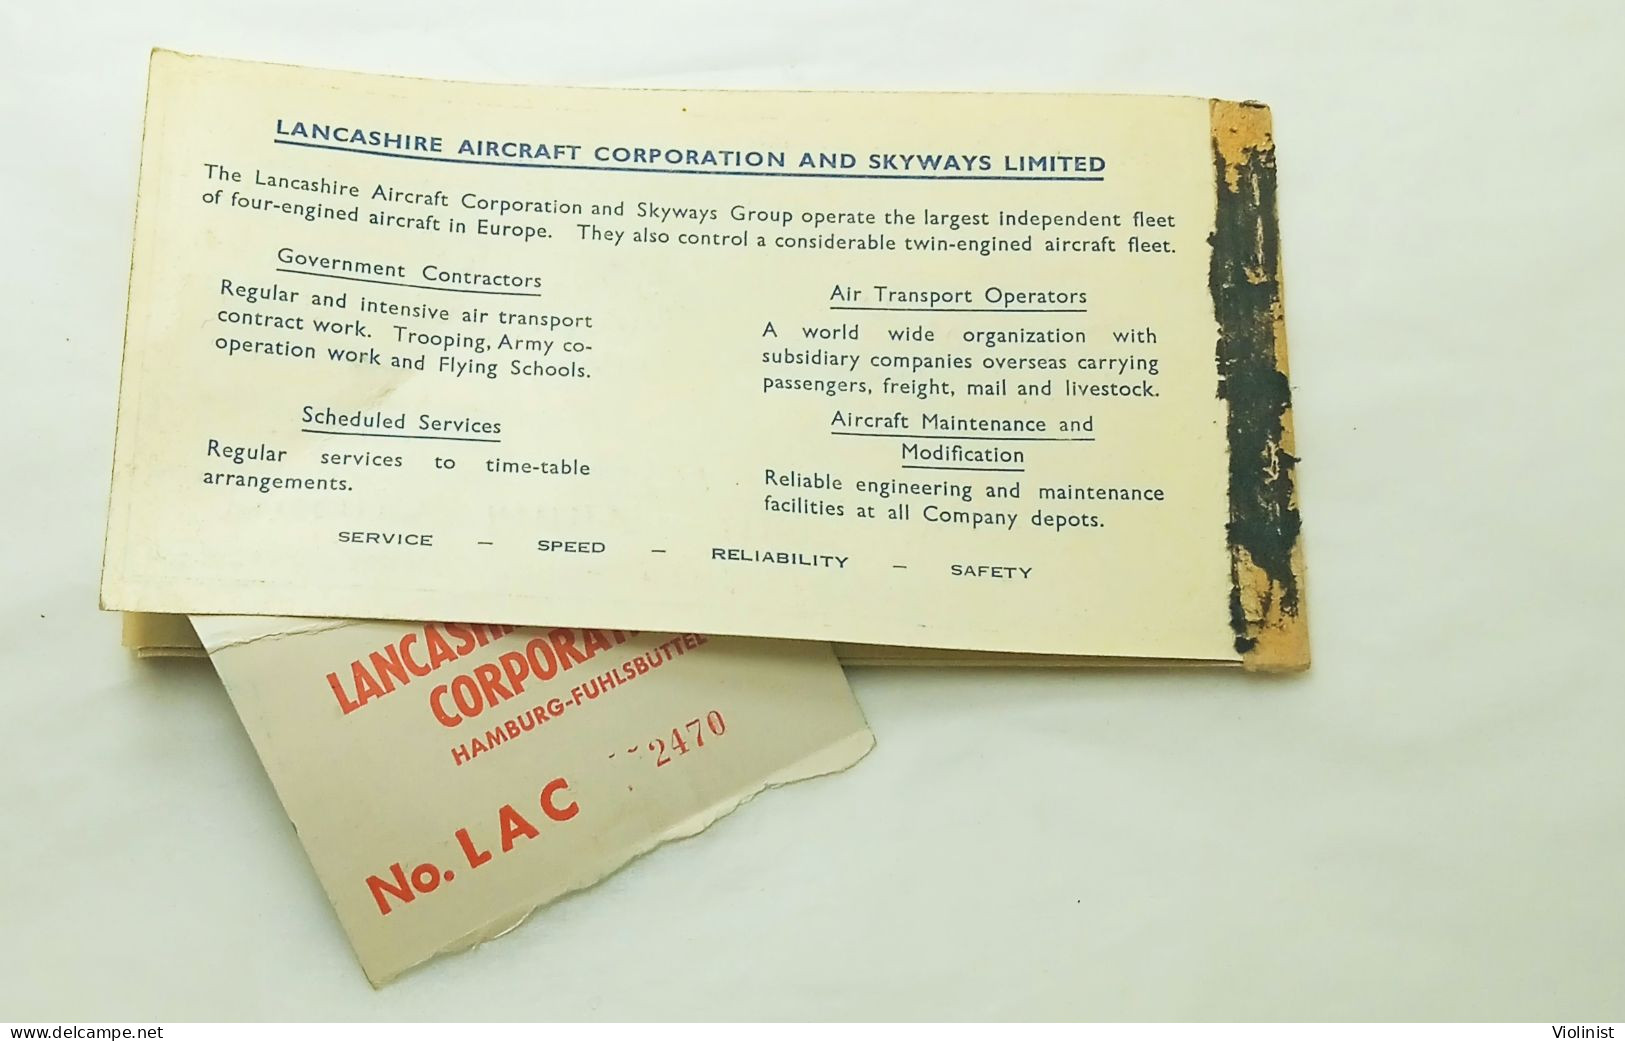 Lancashire Aircraft Corporation-Passenger Ticket and baggage check-1955.